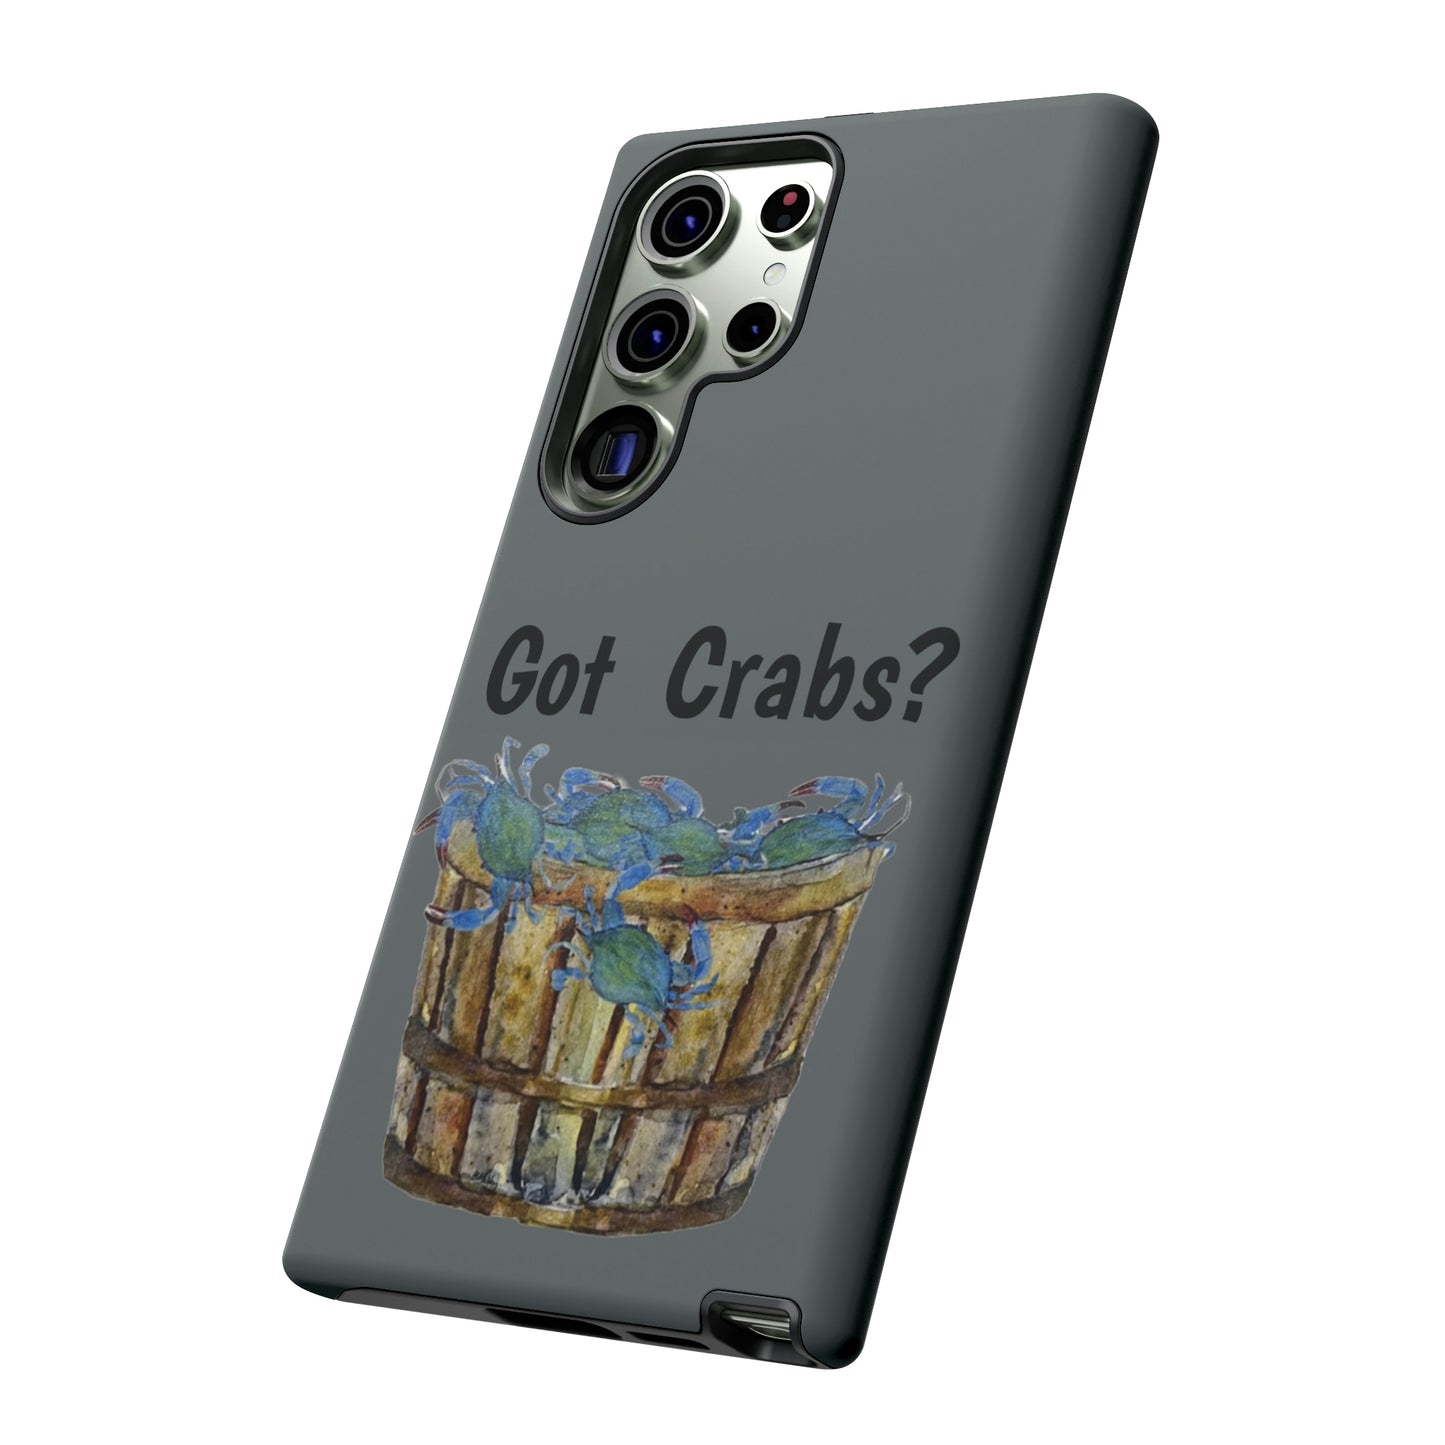 Got Crabs? Tough Cases